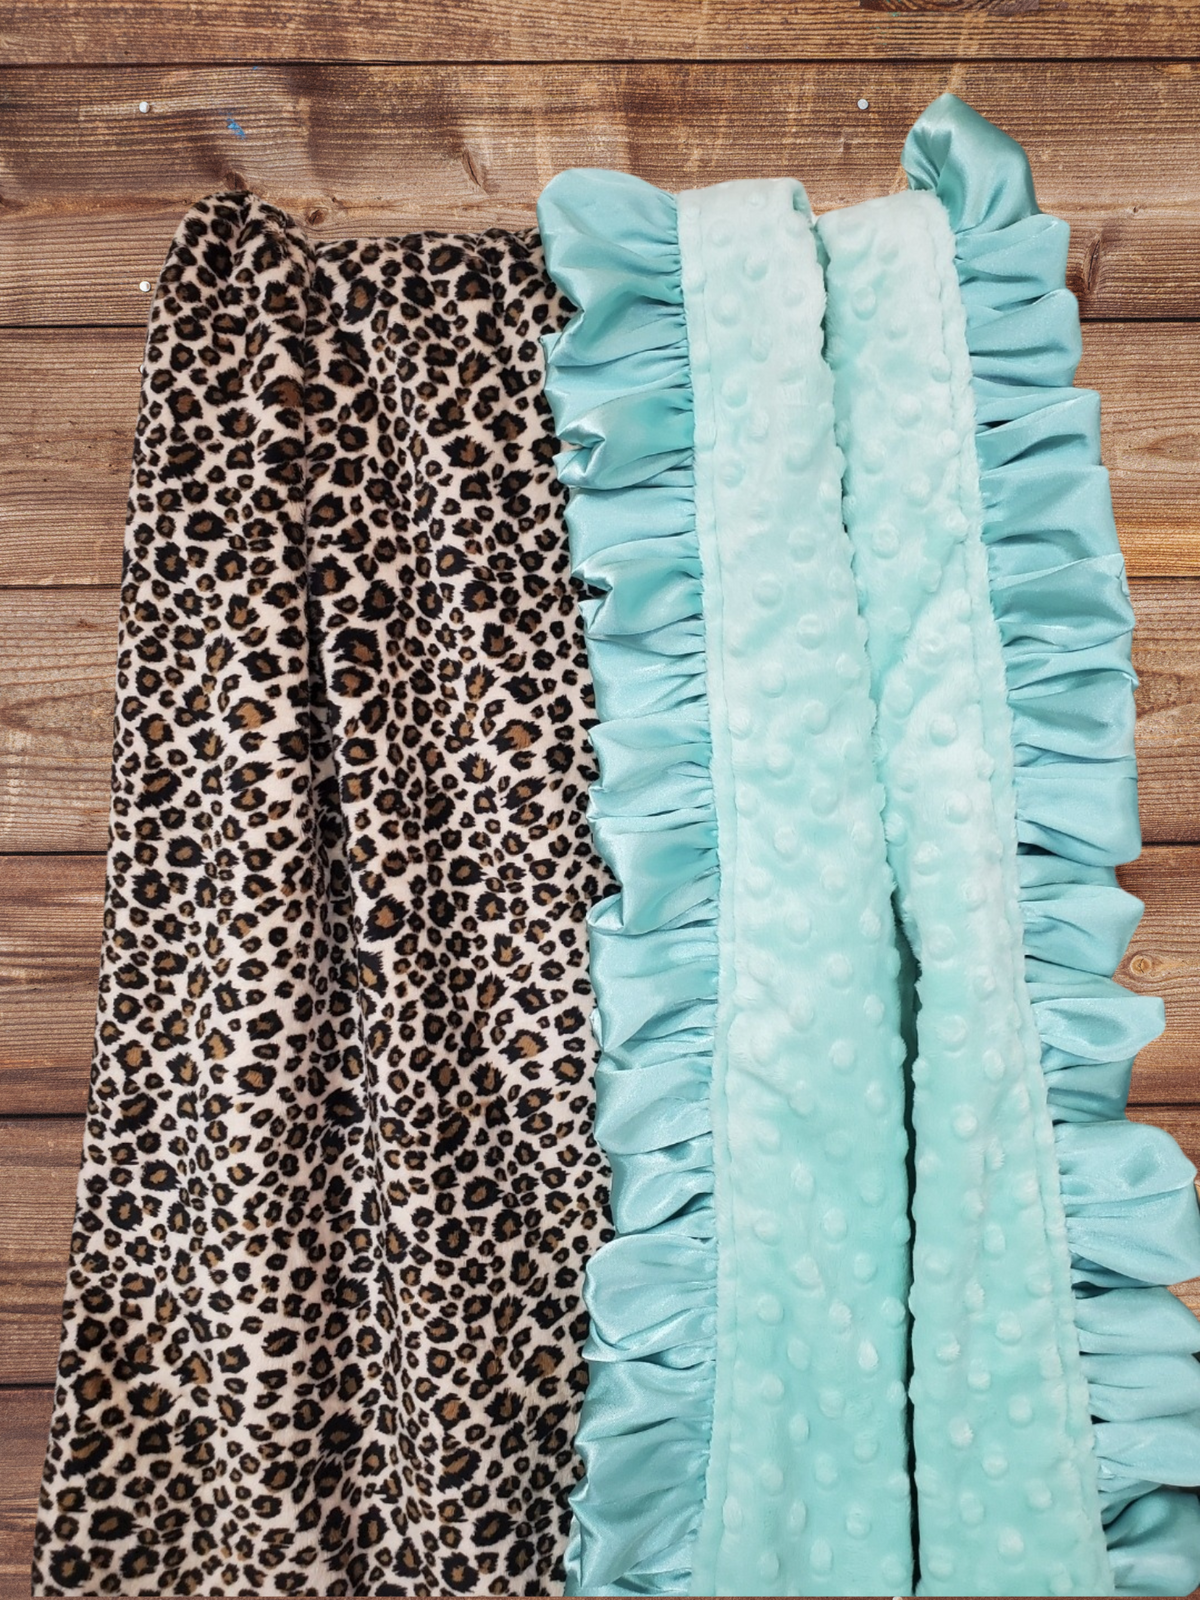 Ruffle Baby Blanket - Cheetah Minky and Saltwater Minky Blanket - DBC Baby Bedding Co 